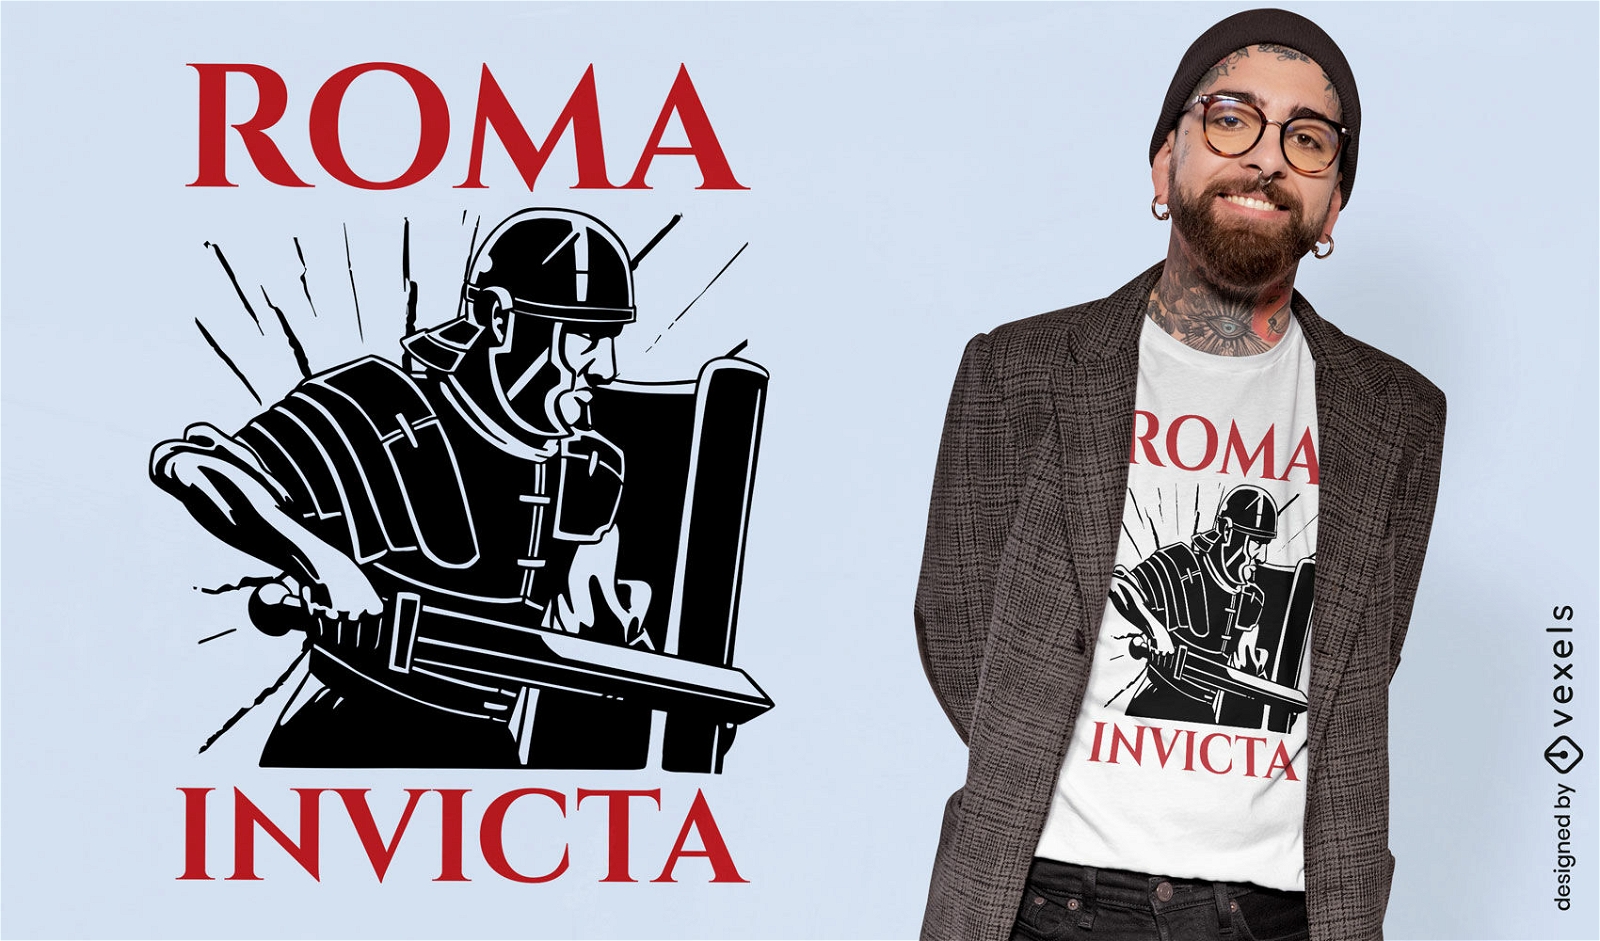 Dise?o de camiseta de Roma invicta.